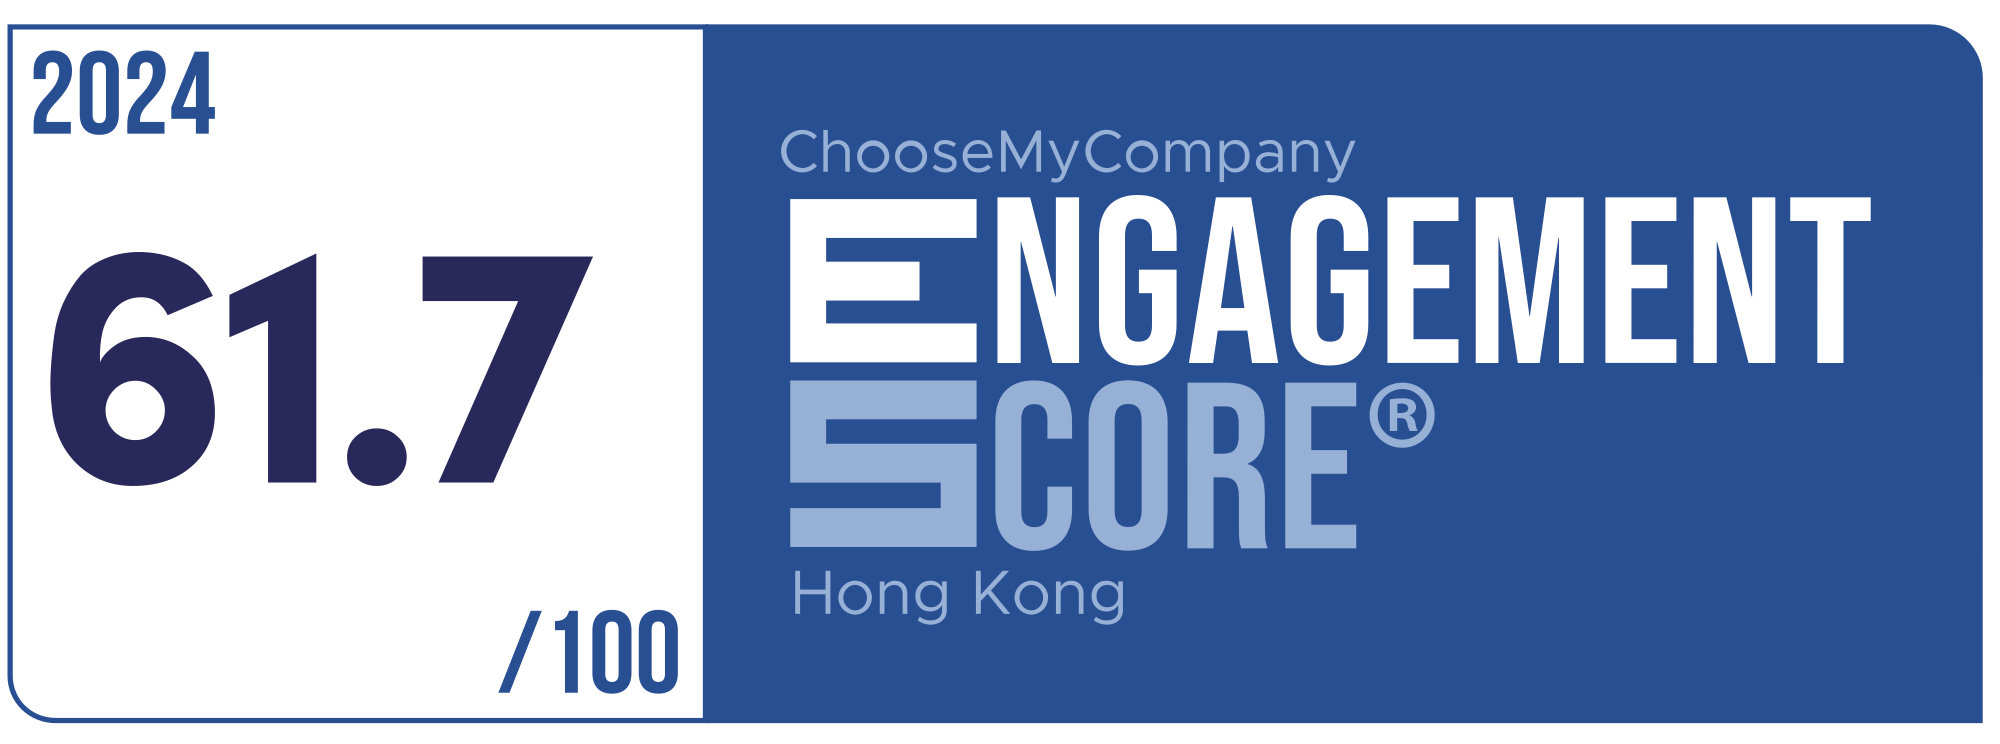 Label Engagement Score 2024 Hong Kong